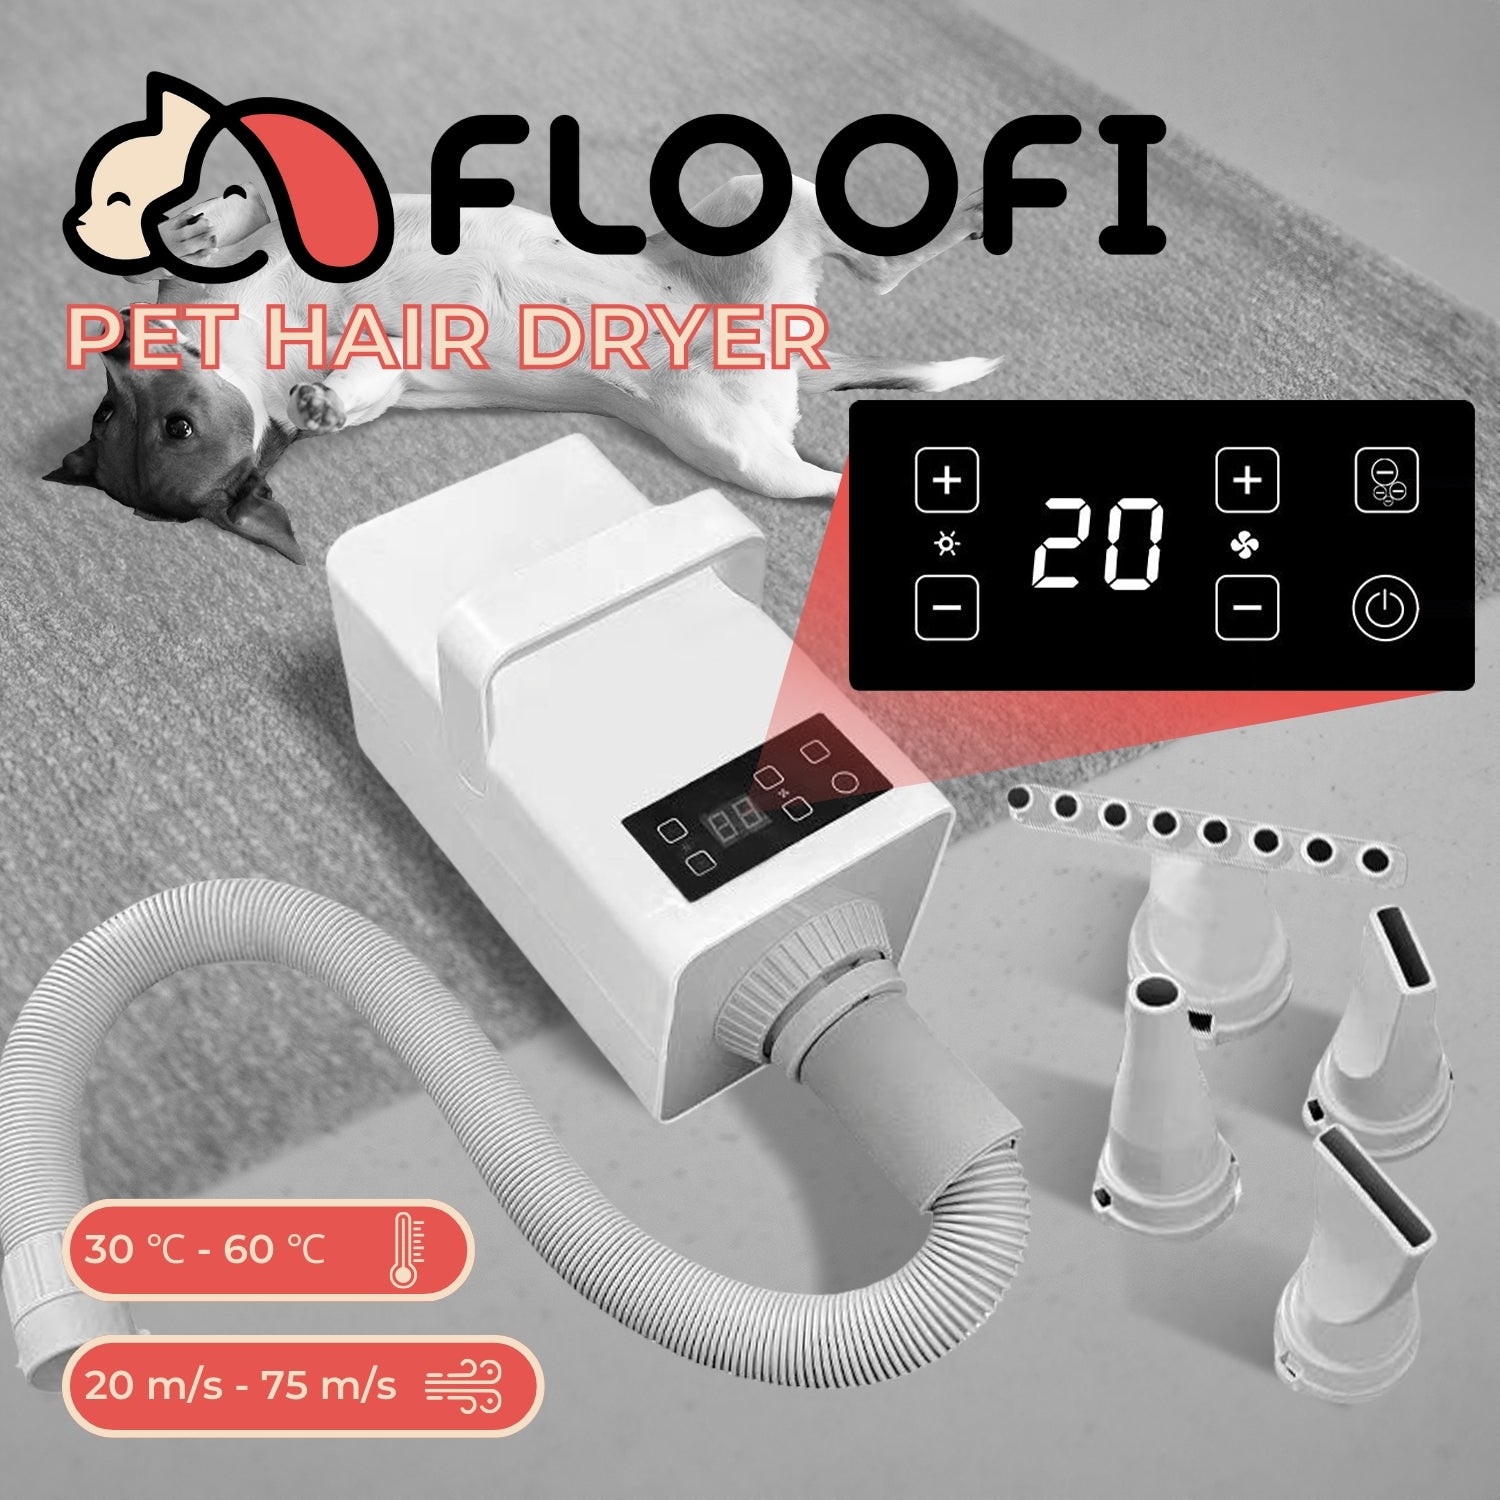 Floofi Pet Hair Dryer (White)